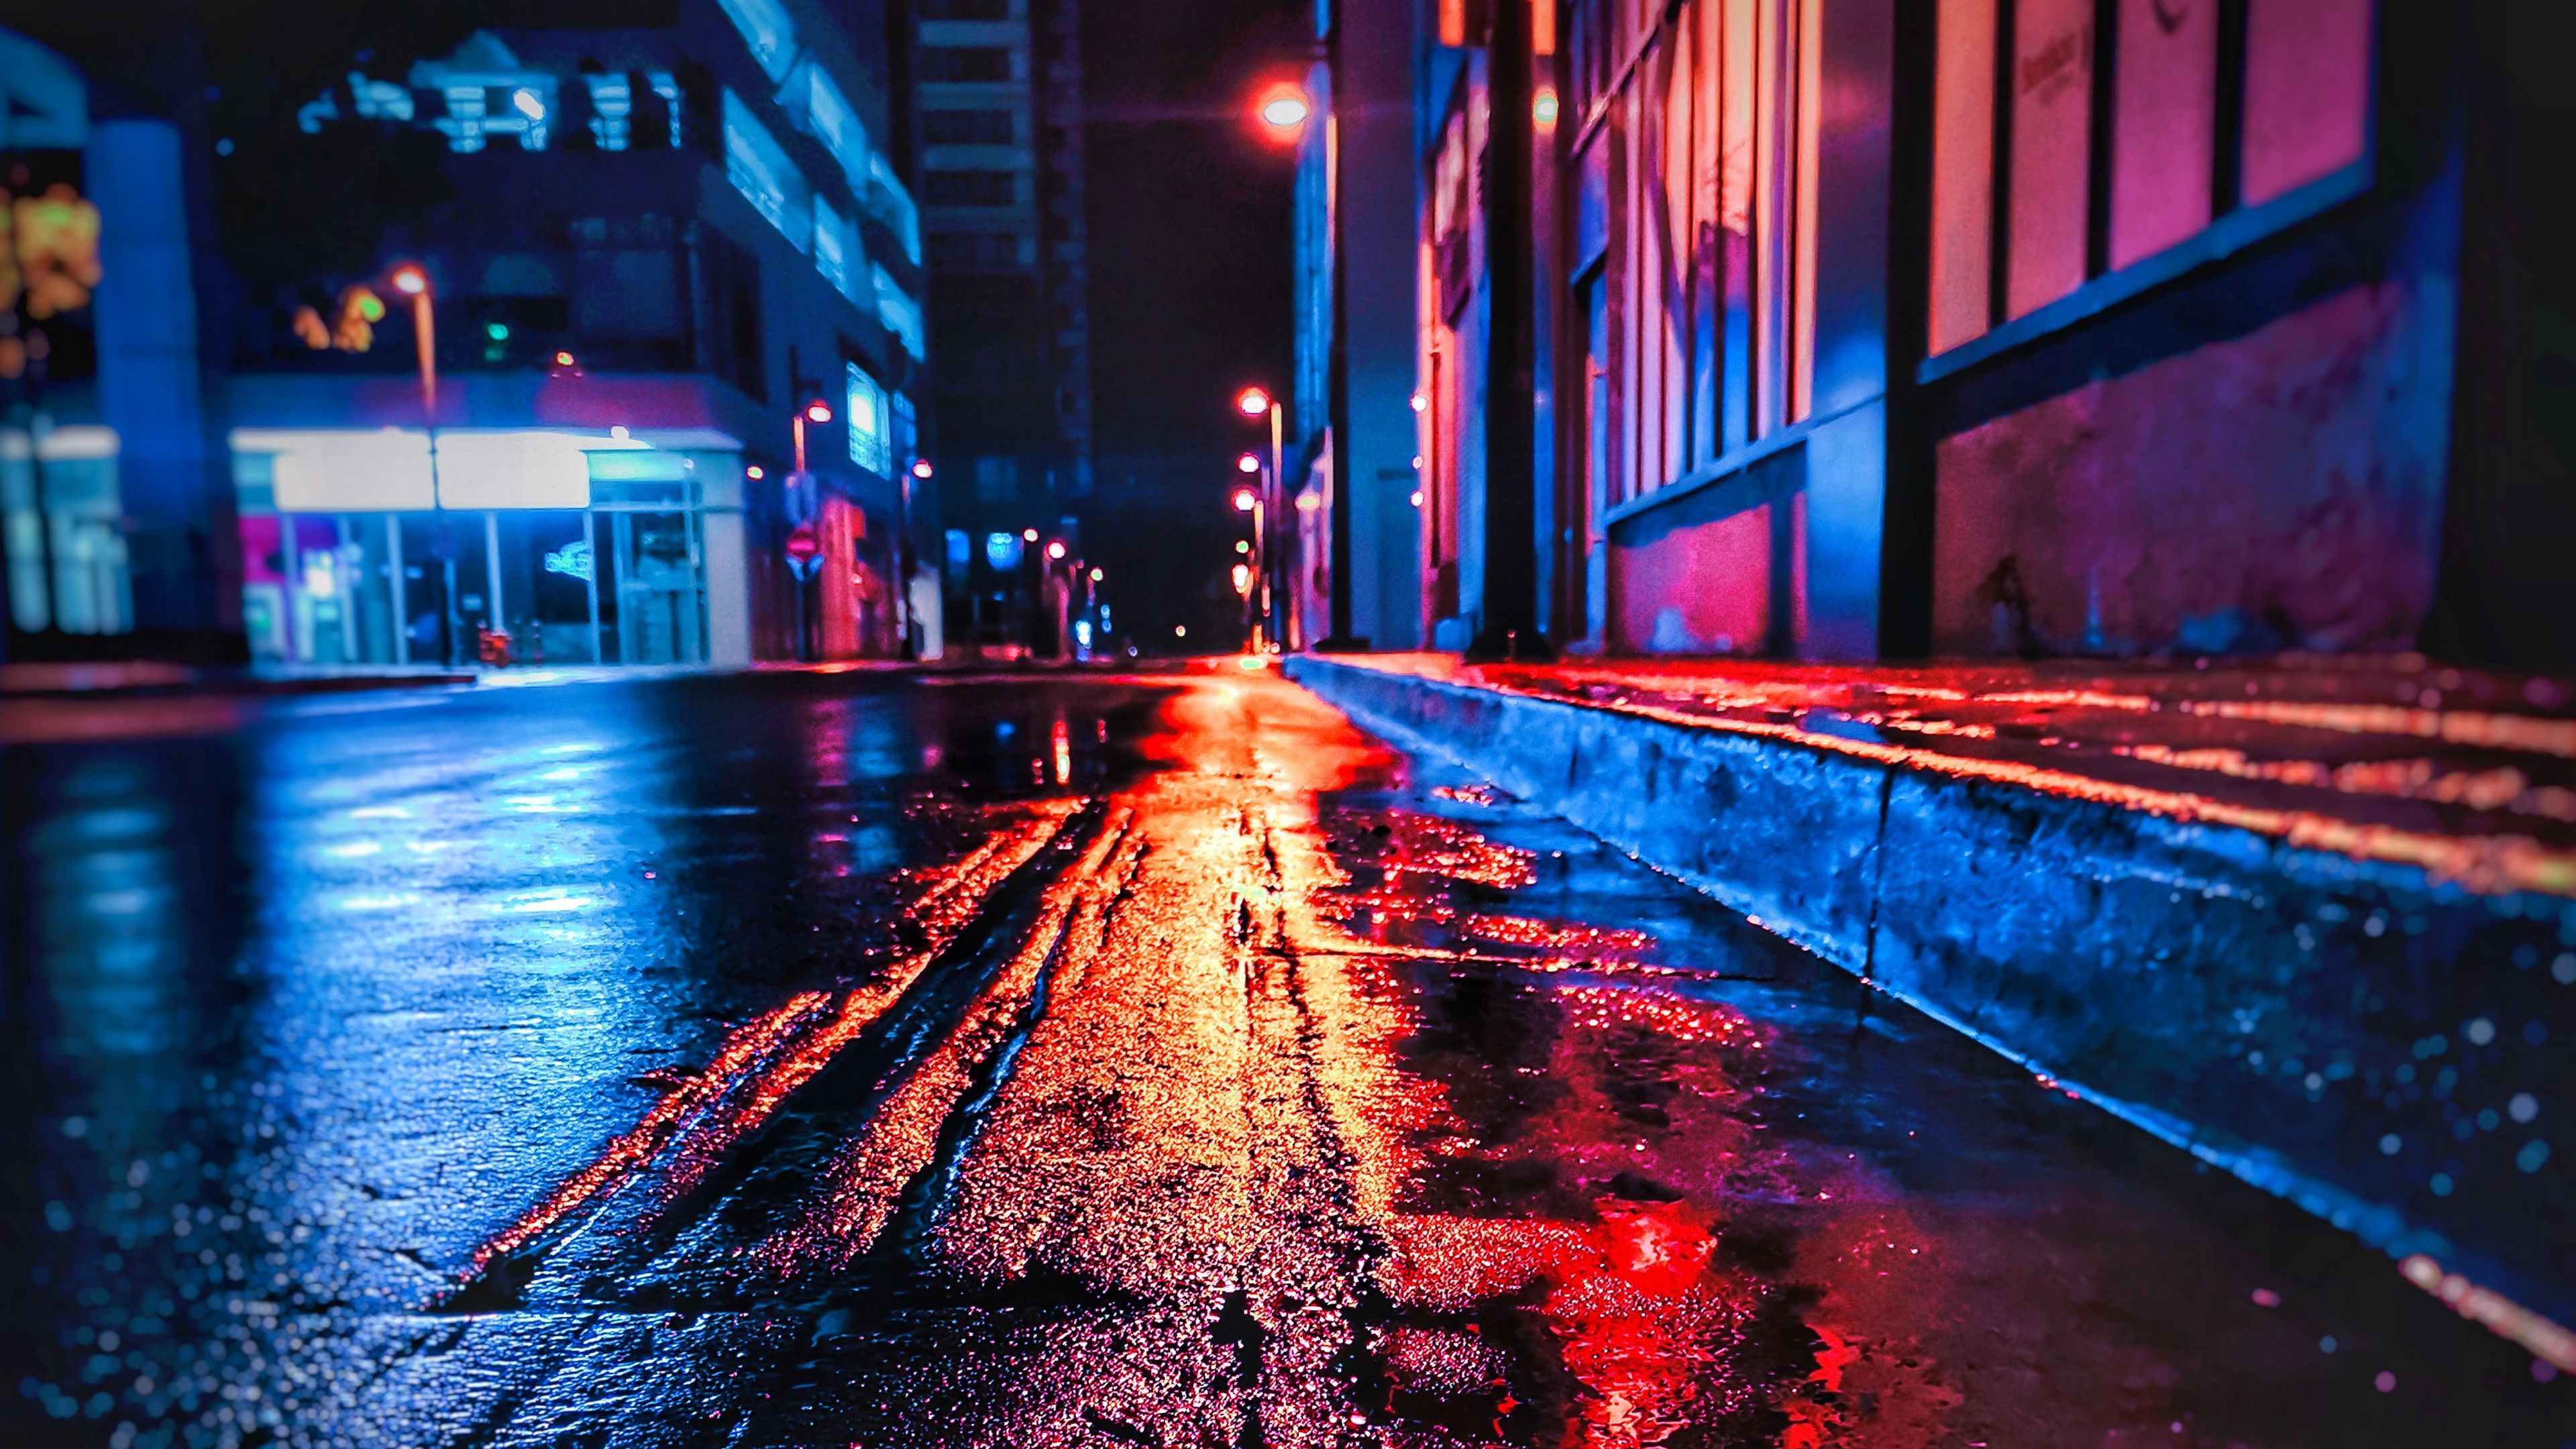 Download wallpaper 3840x2160 street, night, wet, neon, city 4k uhd 16:9 HD background